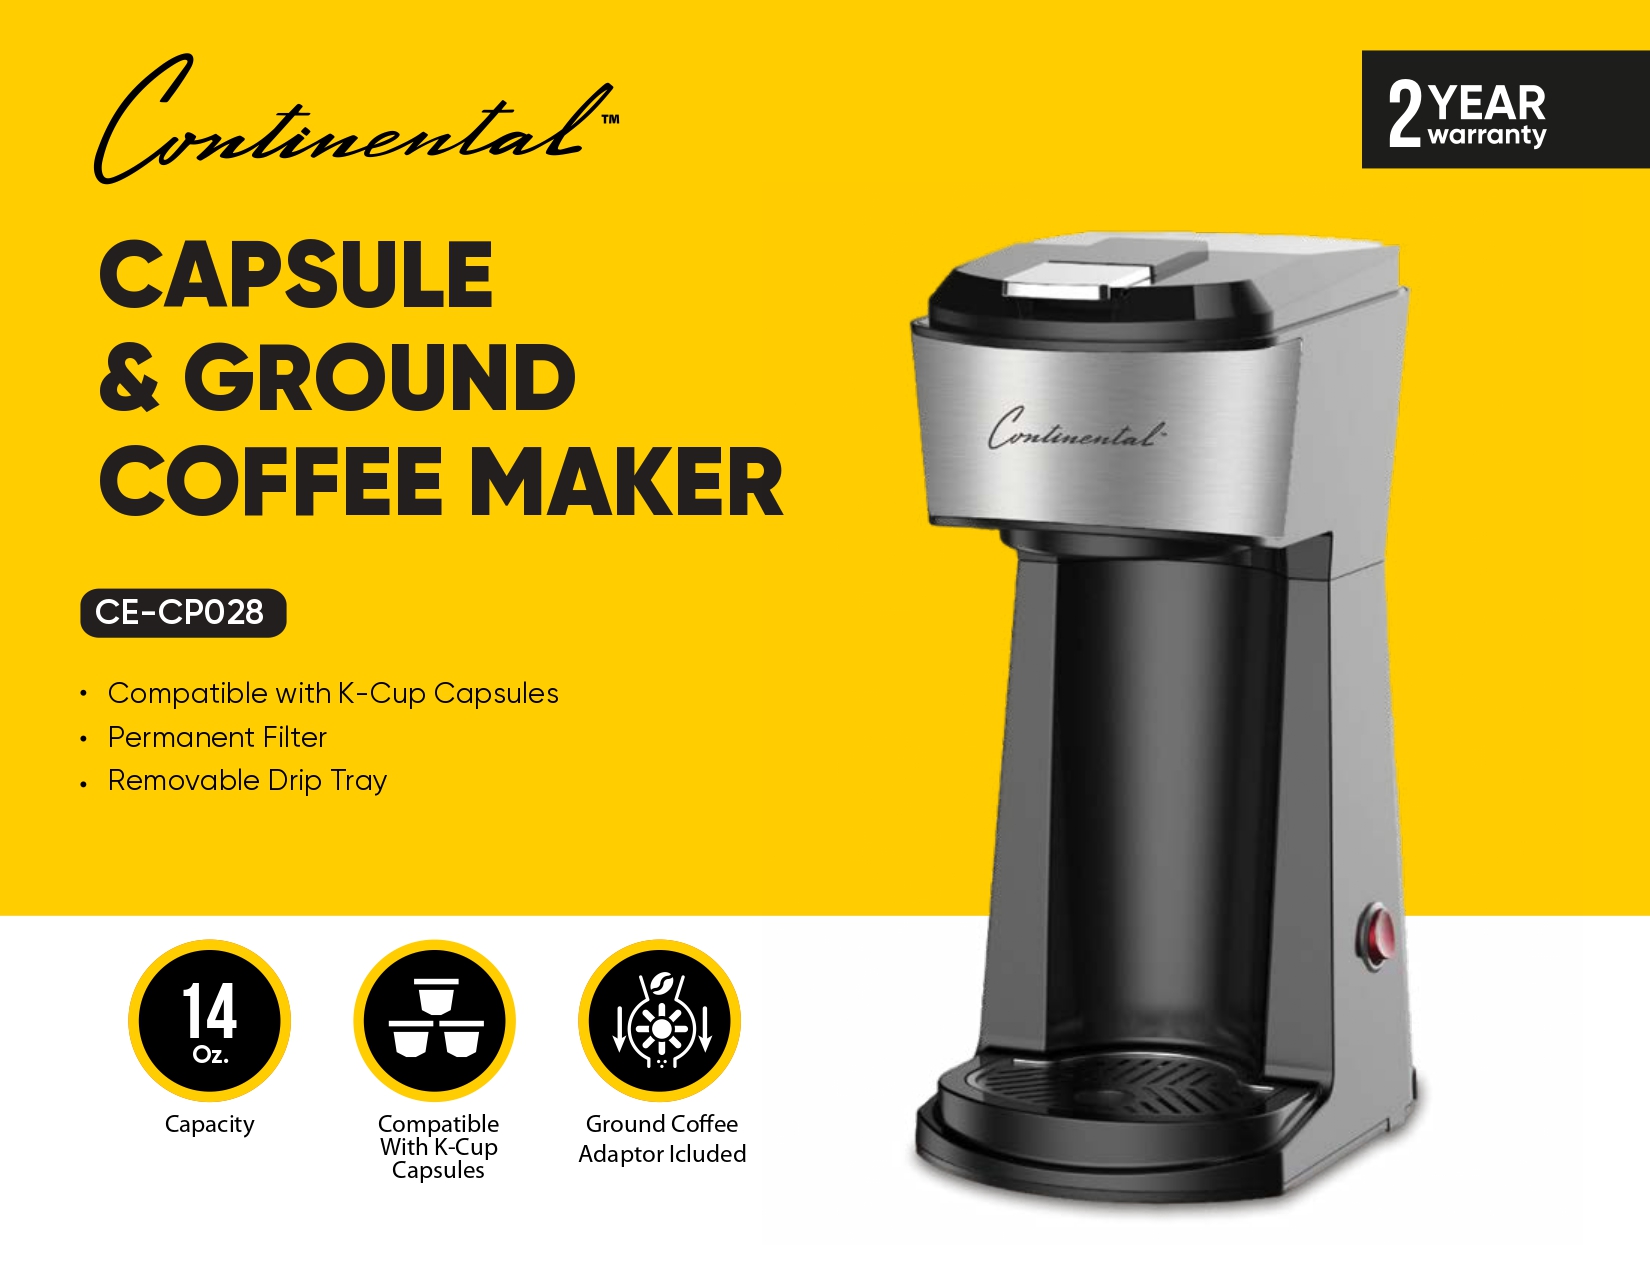 CAPSULE & GROUND COFFEE MAKER